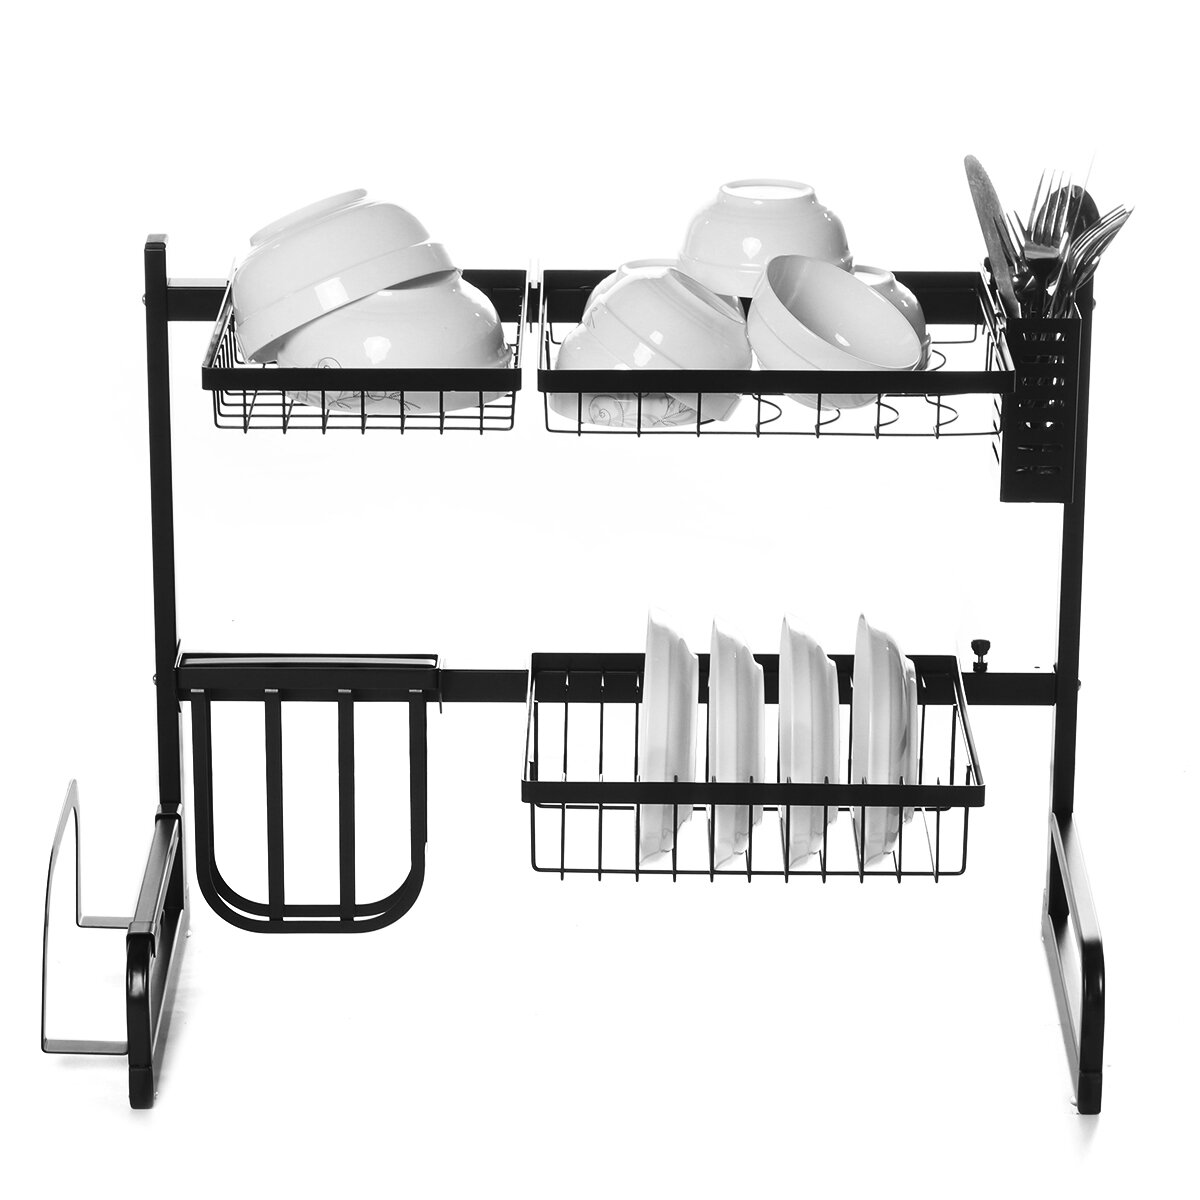 Iron Art Retractable Storage Rack 63-93cm Carbon Steel Multifunctional Dish Rack Kitchen Accessories